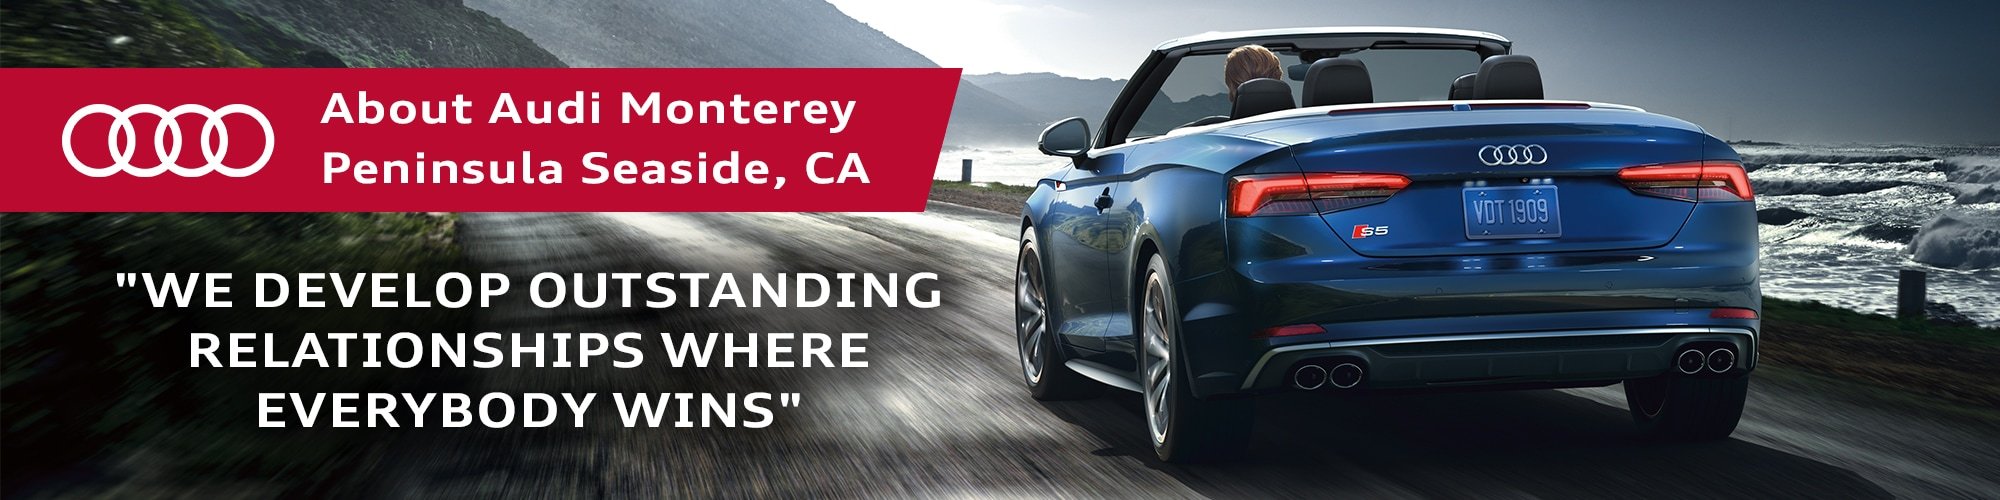 Audi Monterey Peninsula cover